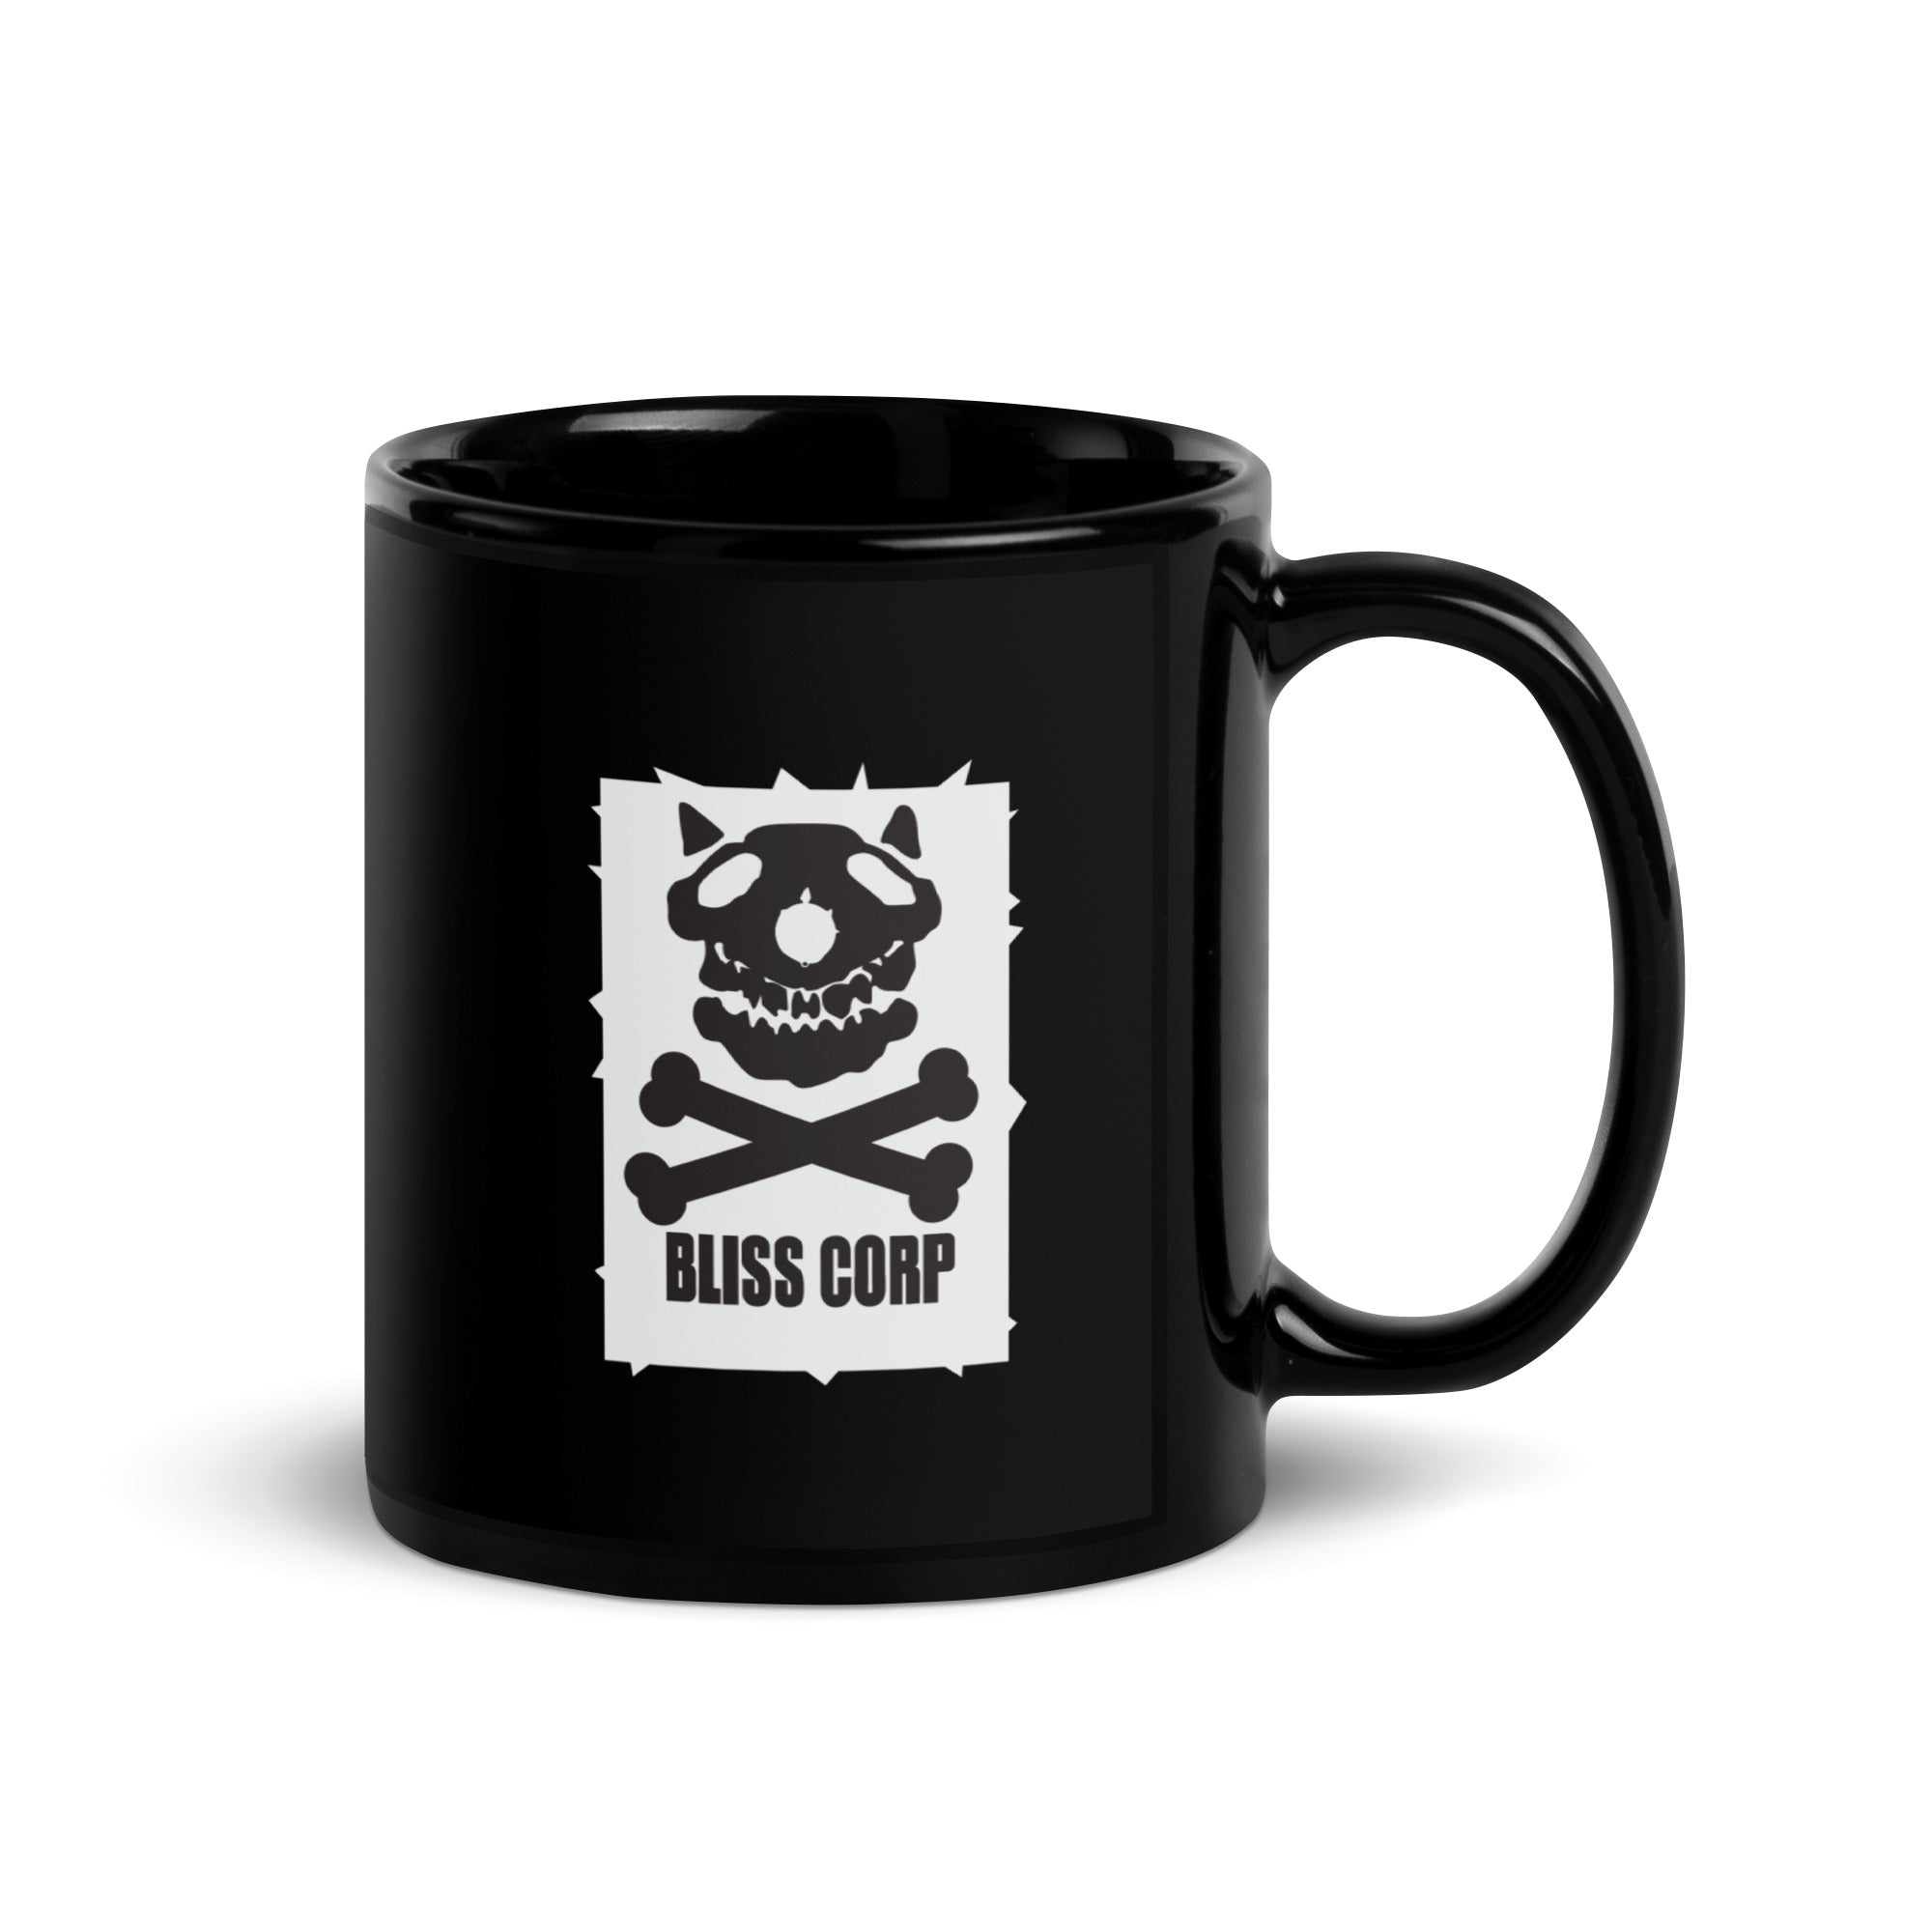 BLISSCORP Mug